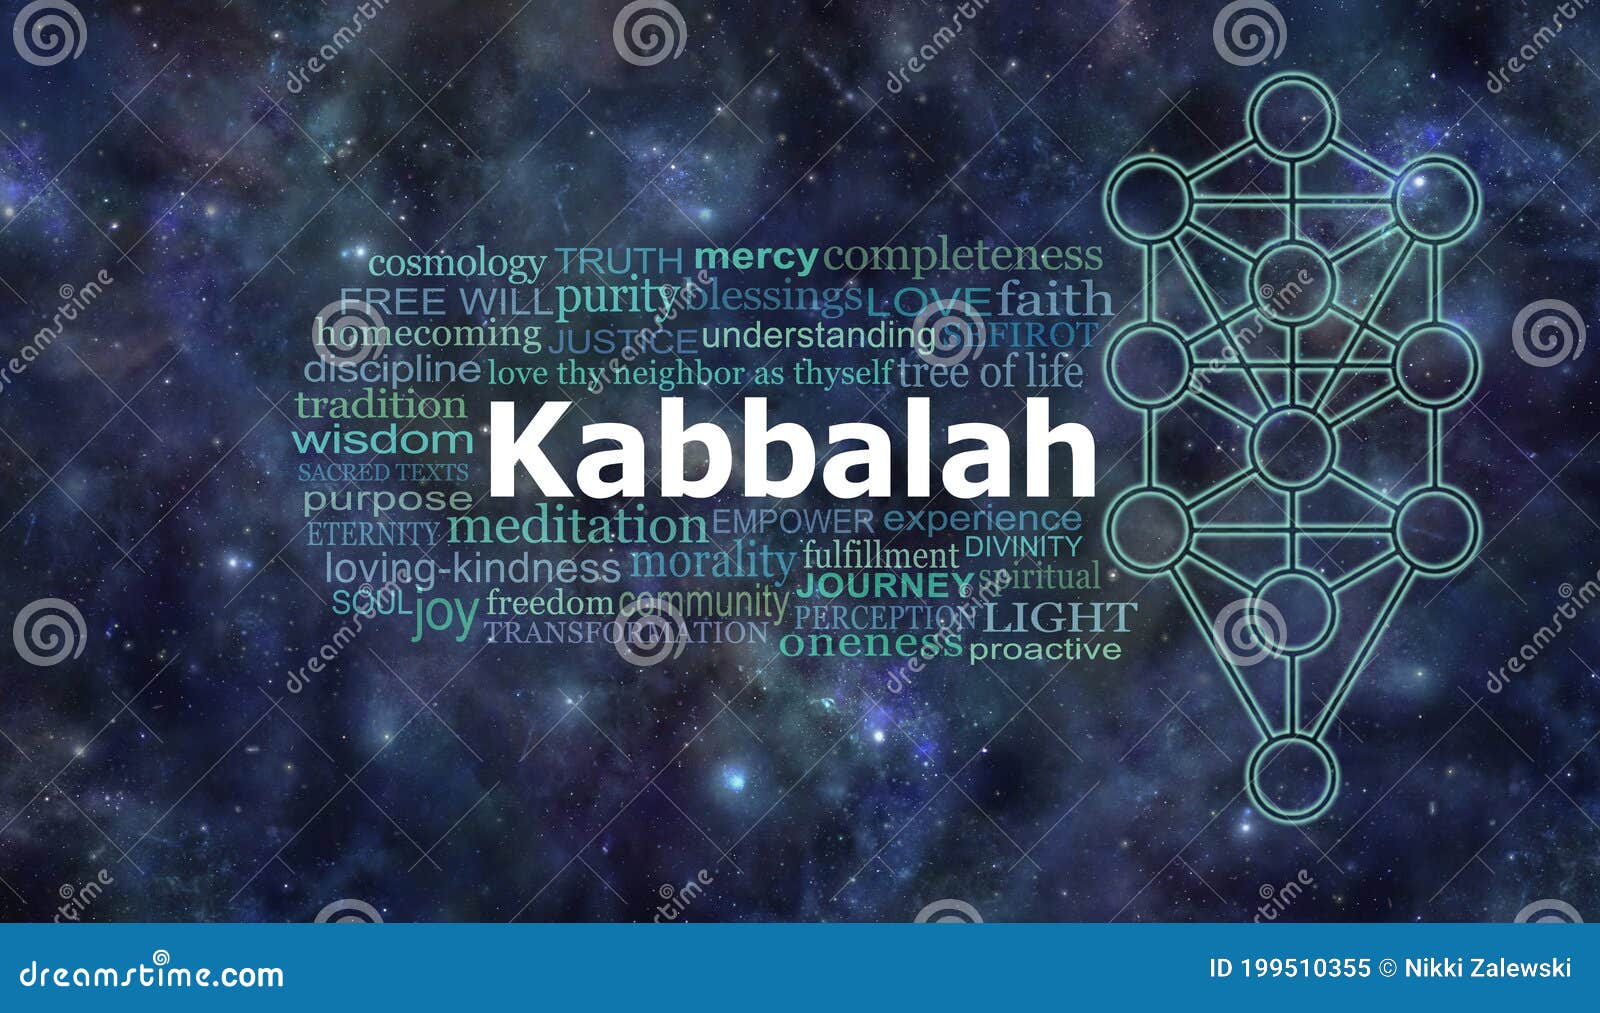 kabbalah tree of life cosmic word cloud